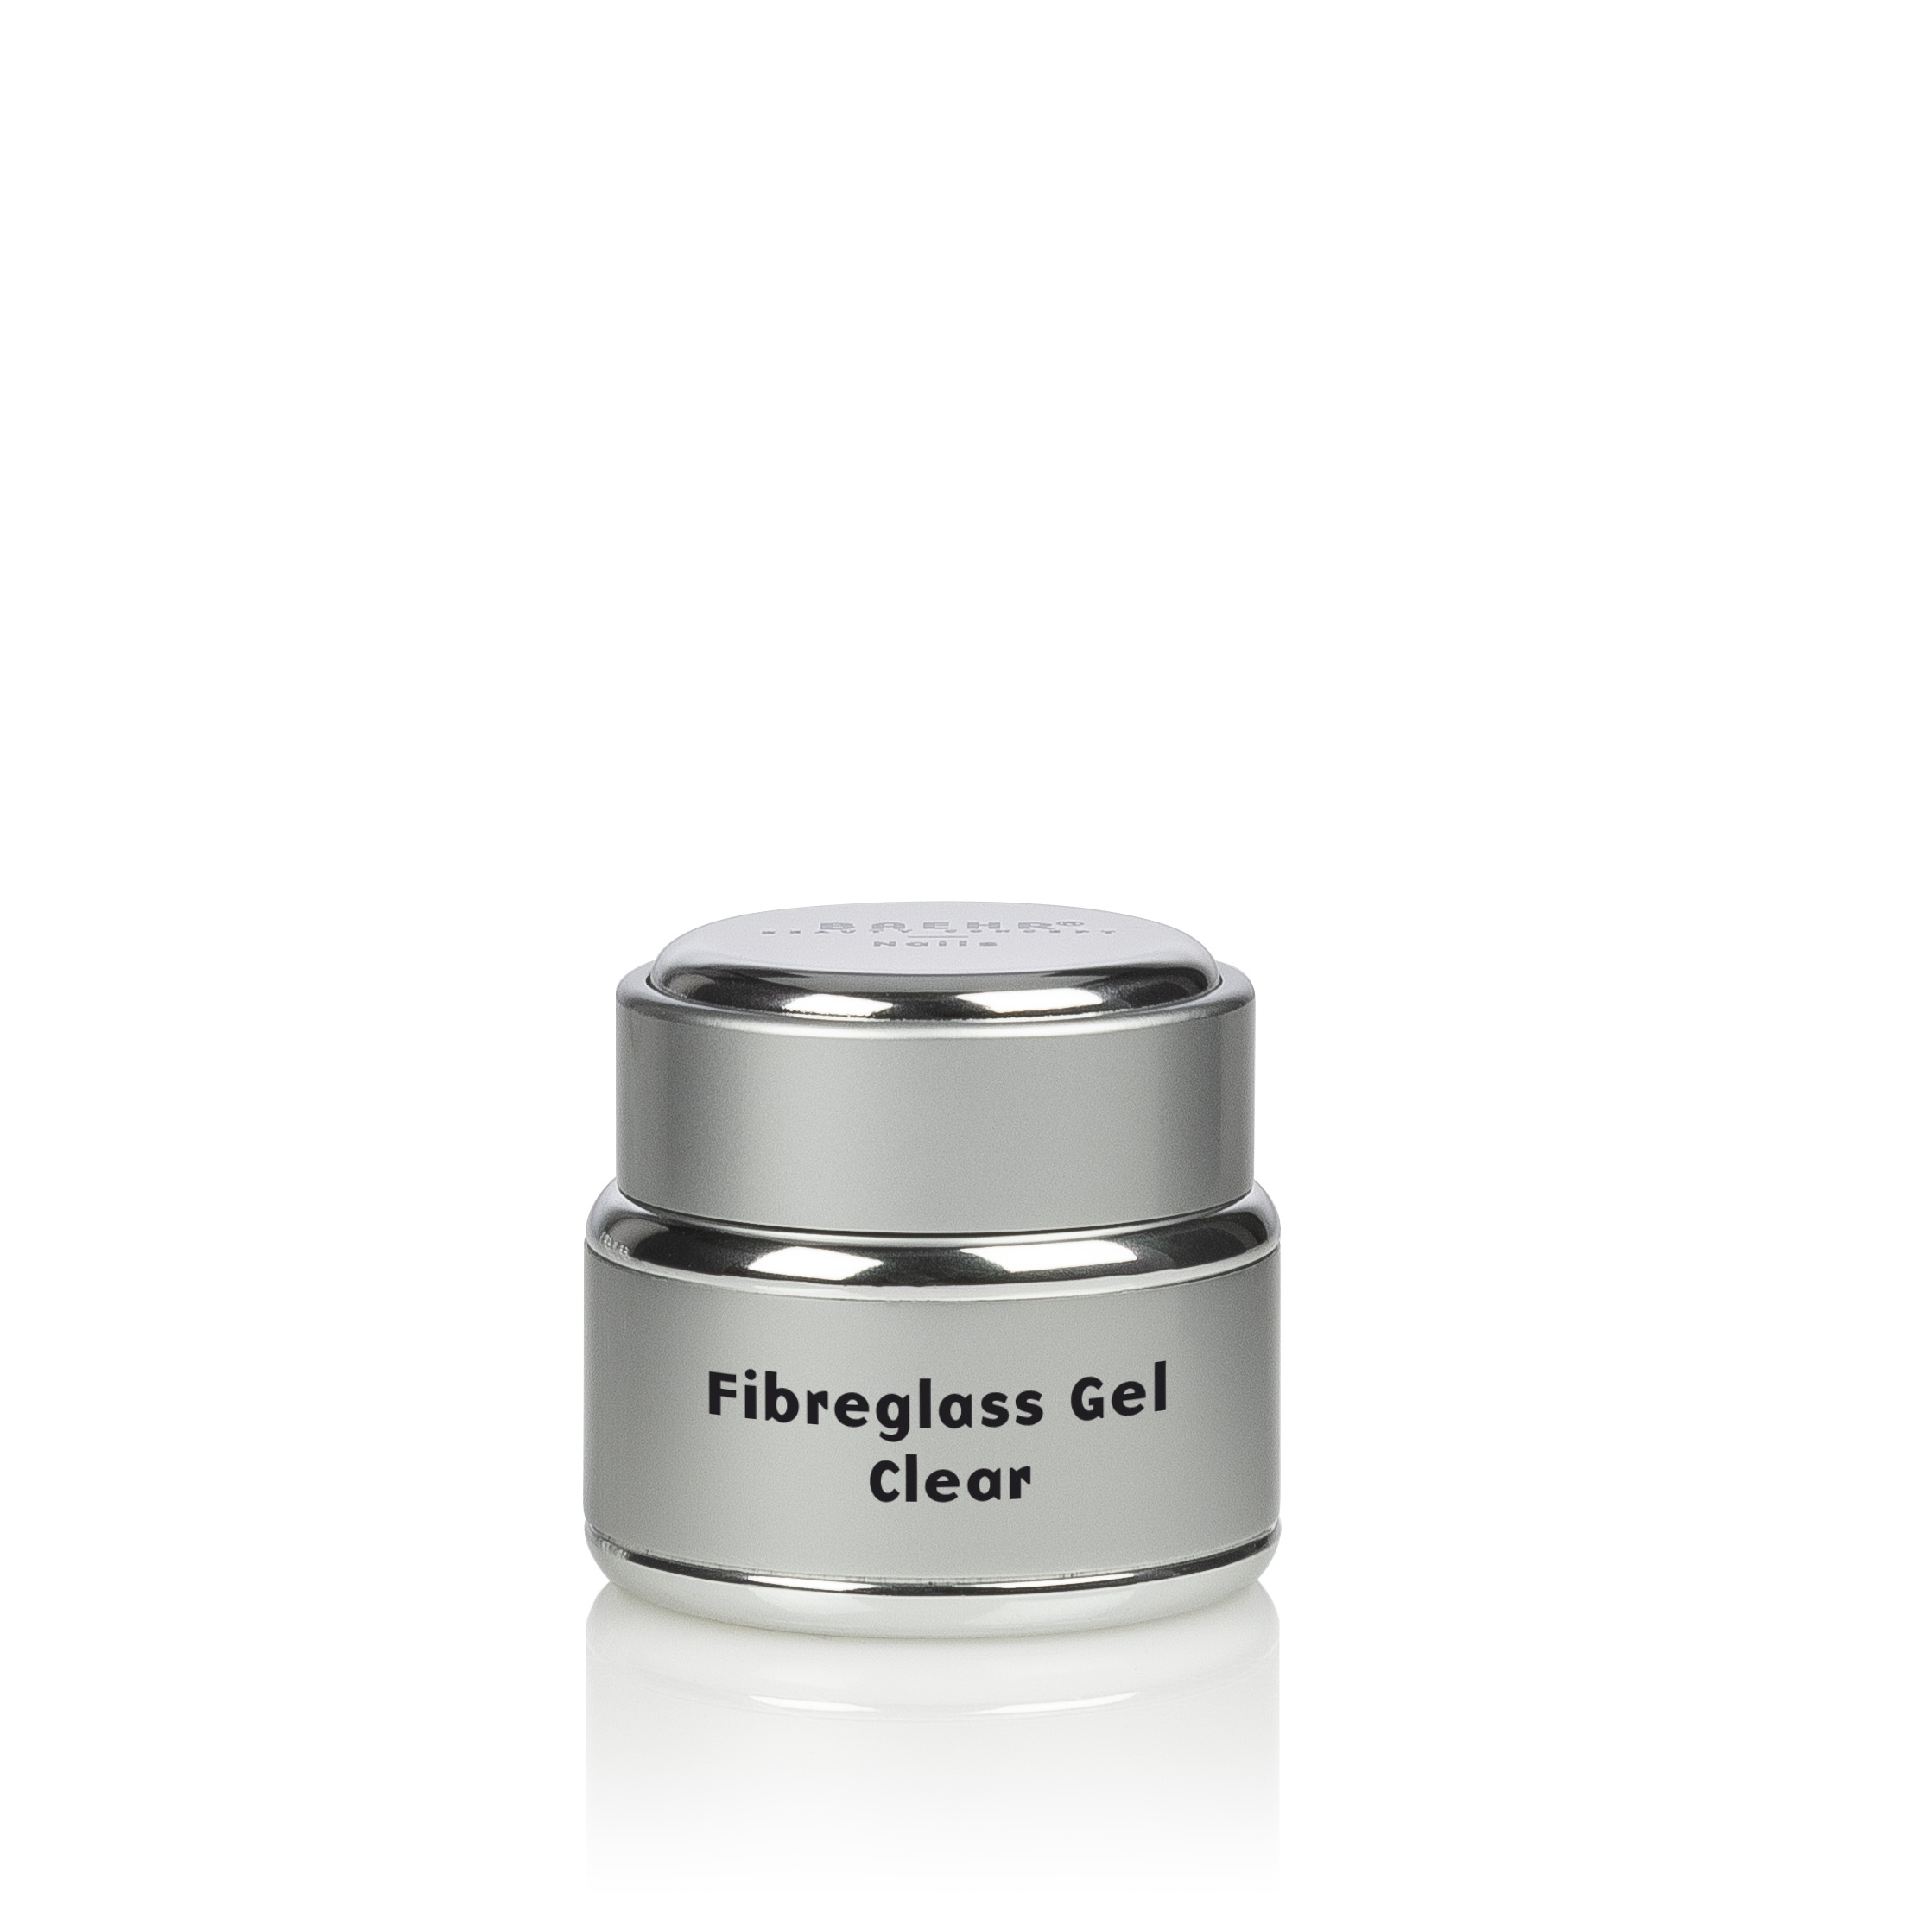 BAEHR BEAUTY CONCEPT - NAILS Fibreglass Gel Clear 5 ml